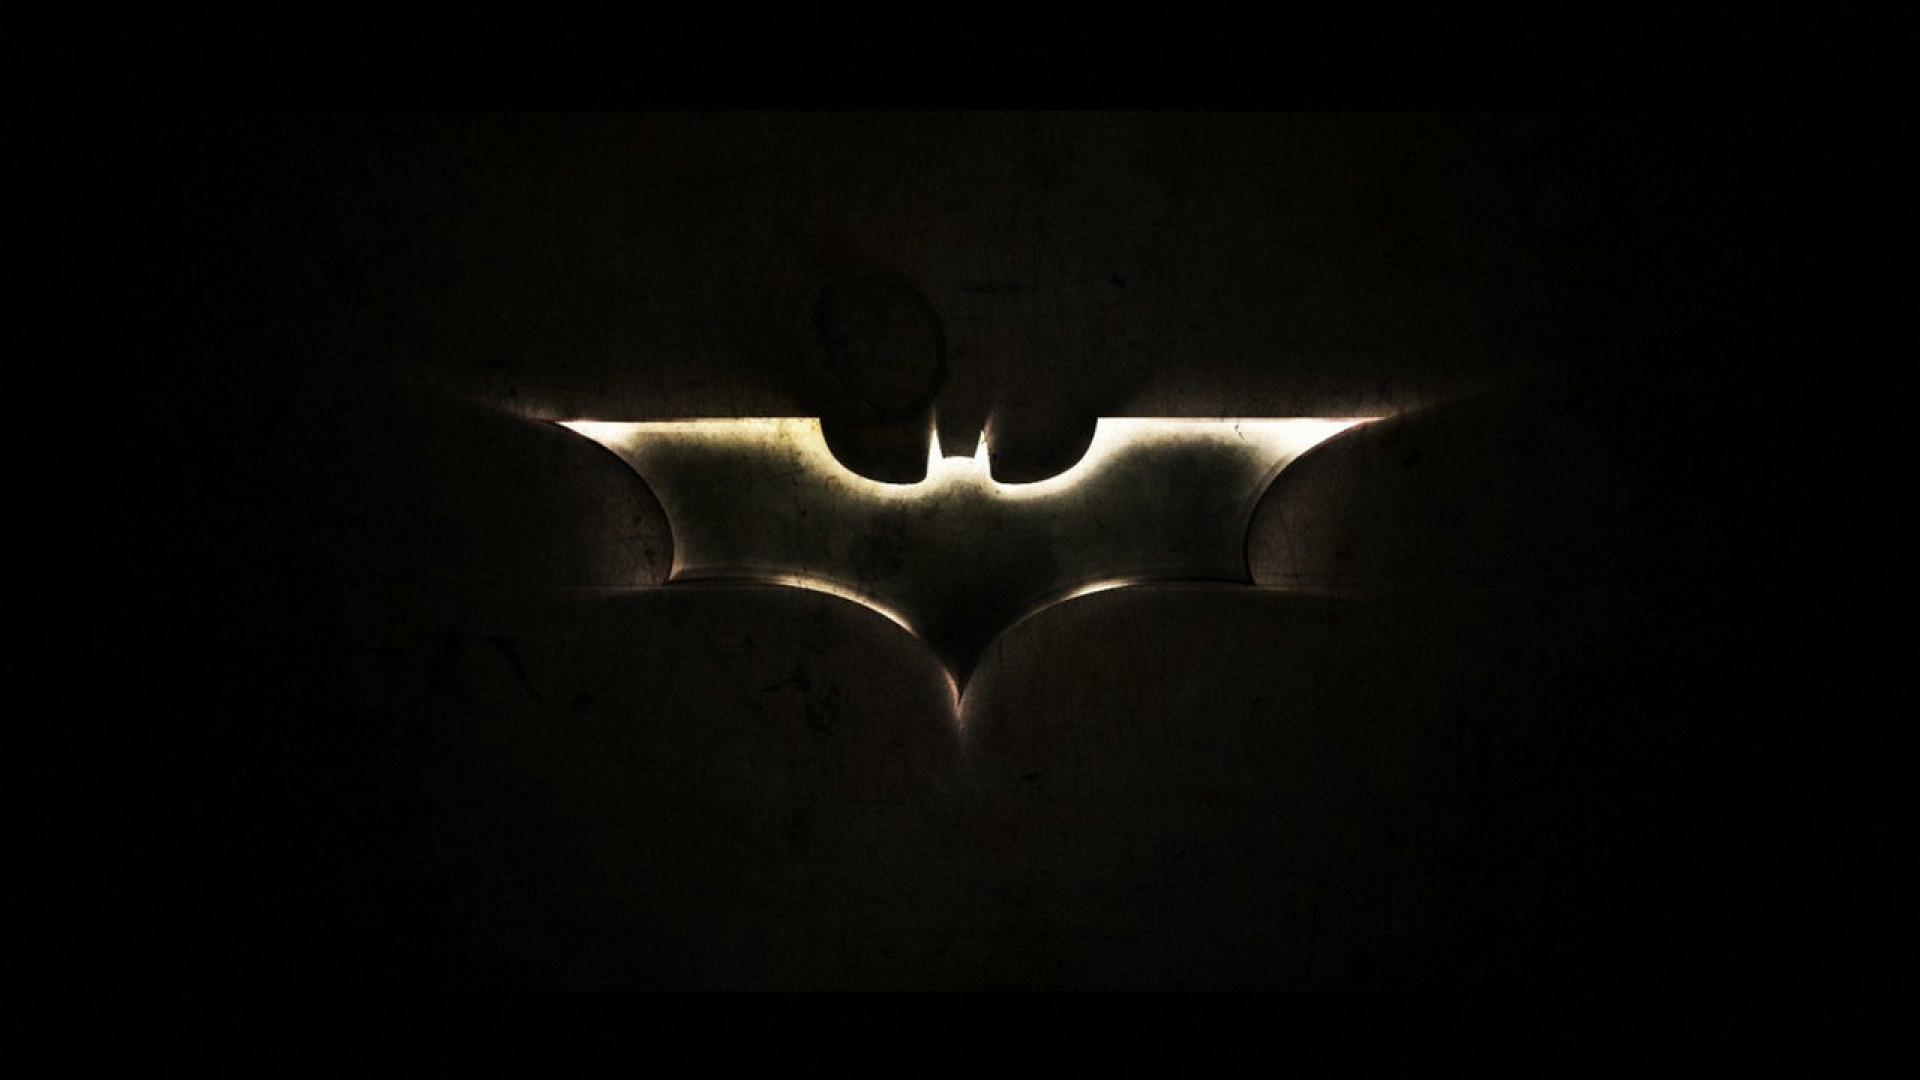 Androidmga Dark Knight Rises HD Wallpaper Of Size